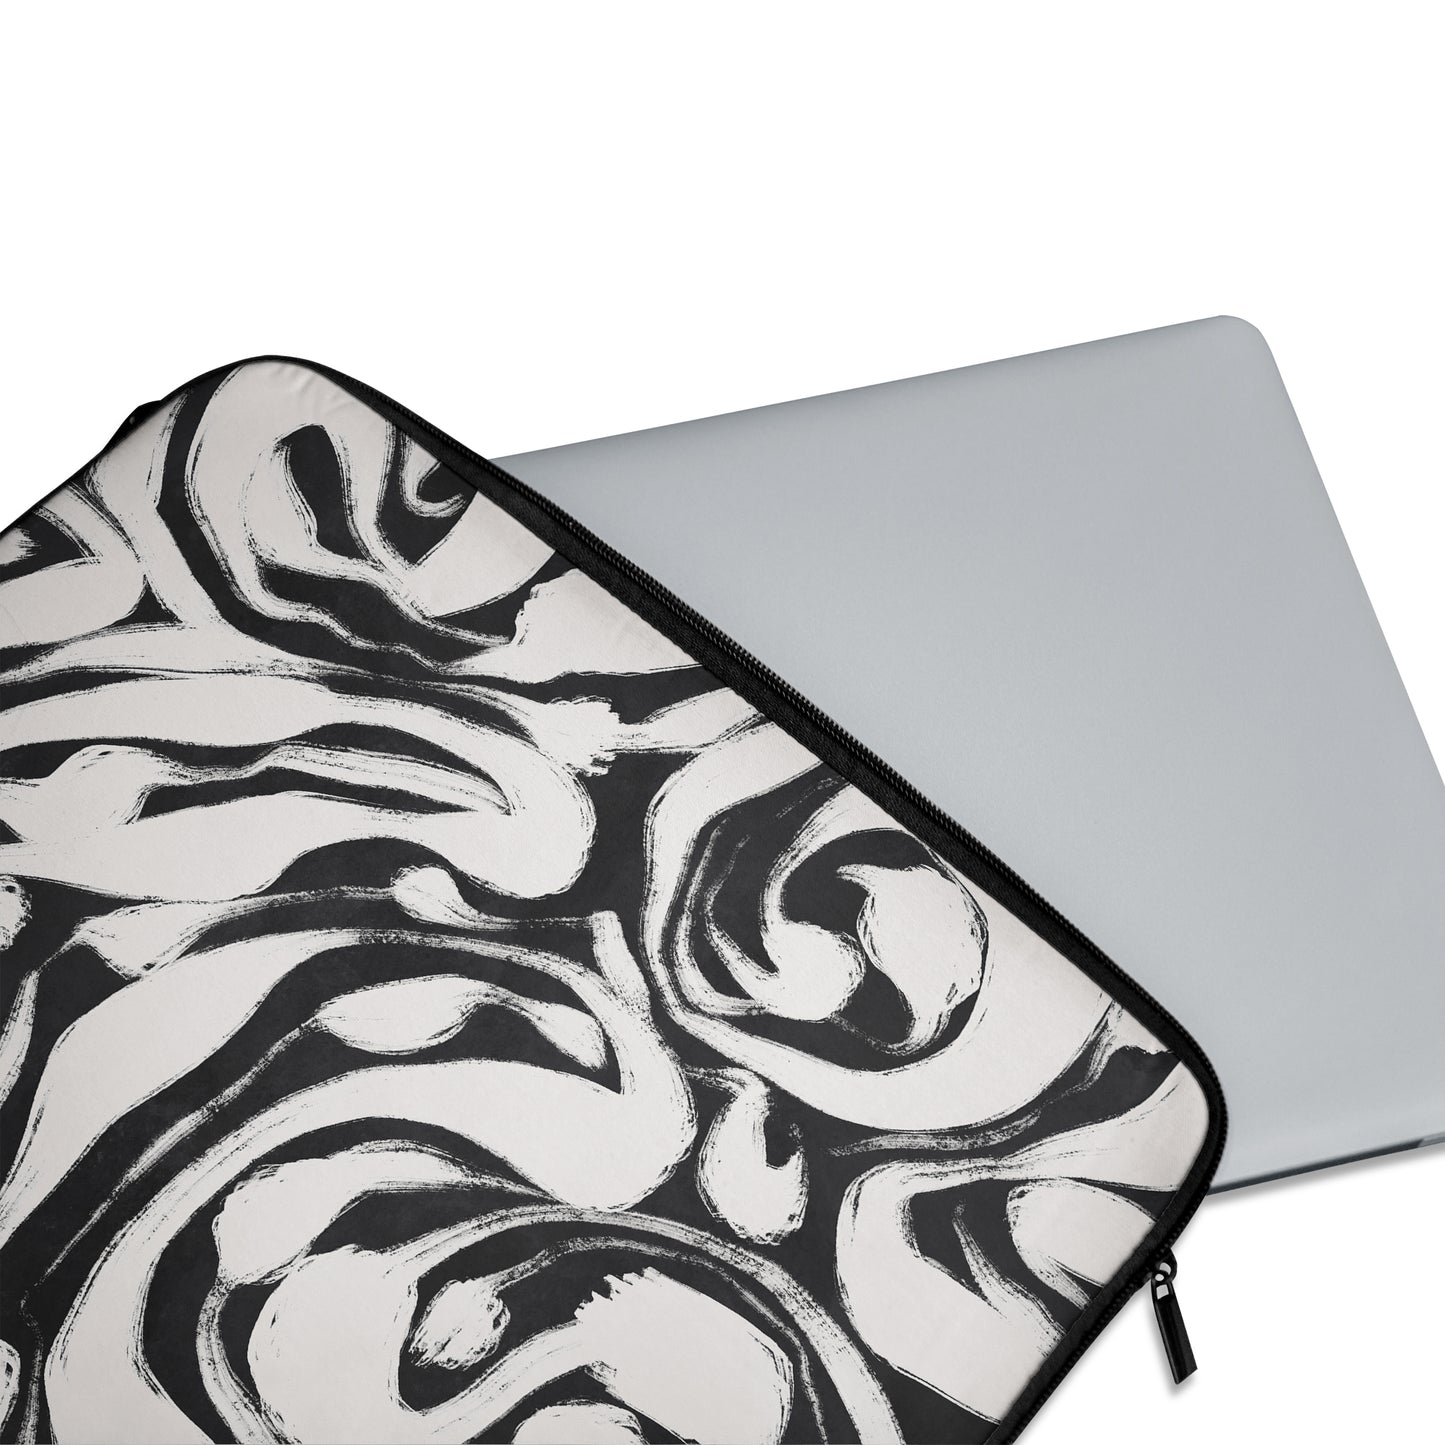 B&W Abstract Art - Laptop Sleeve